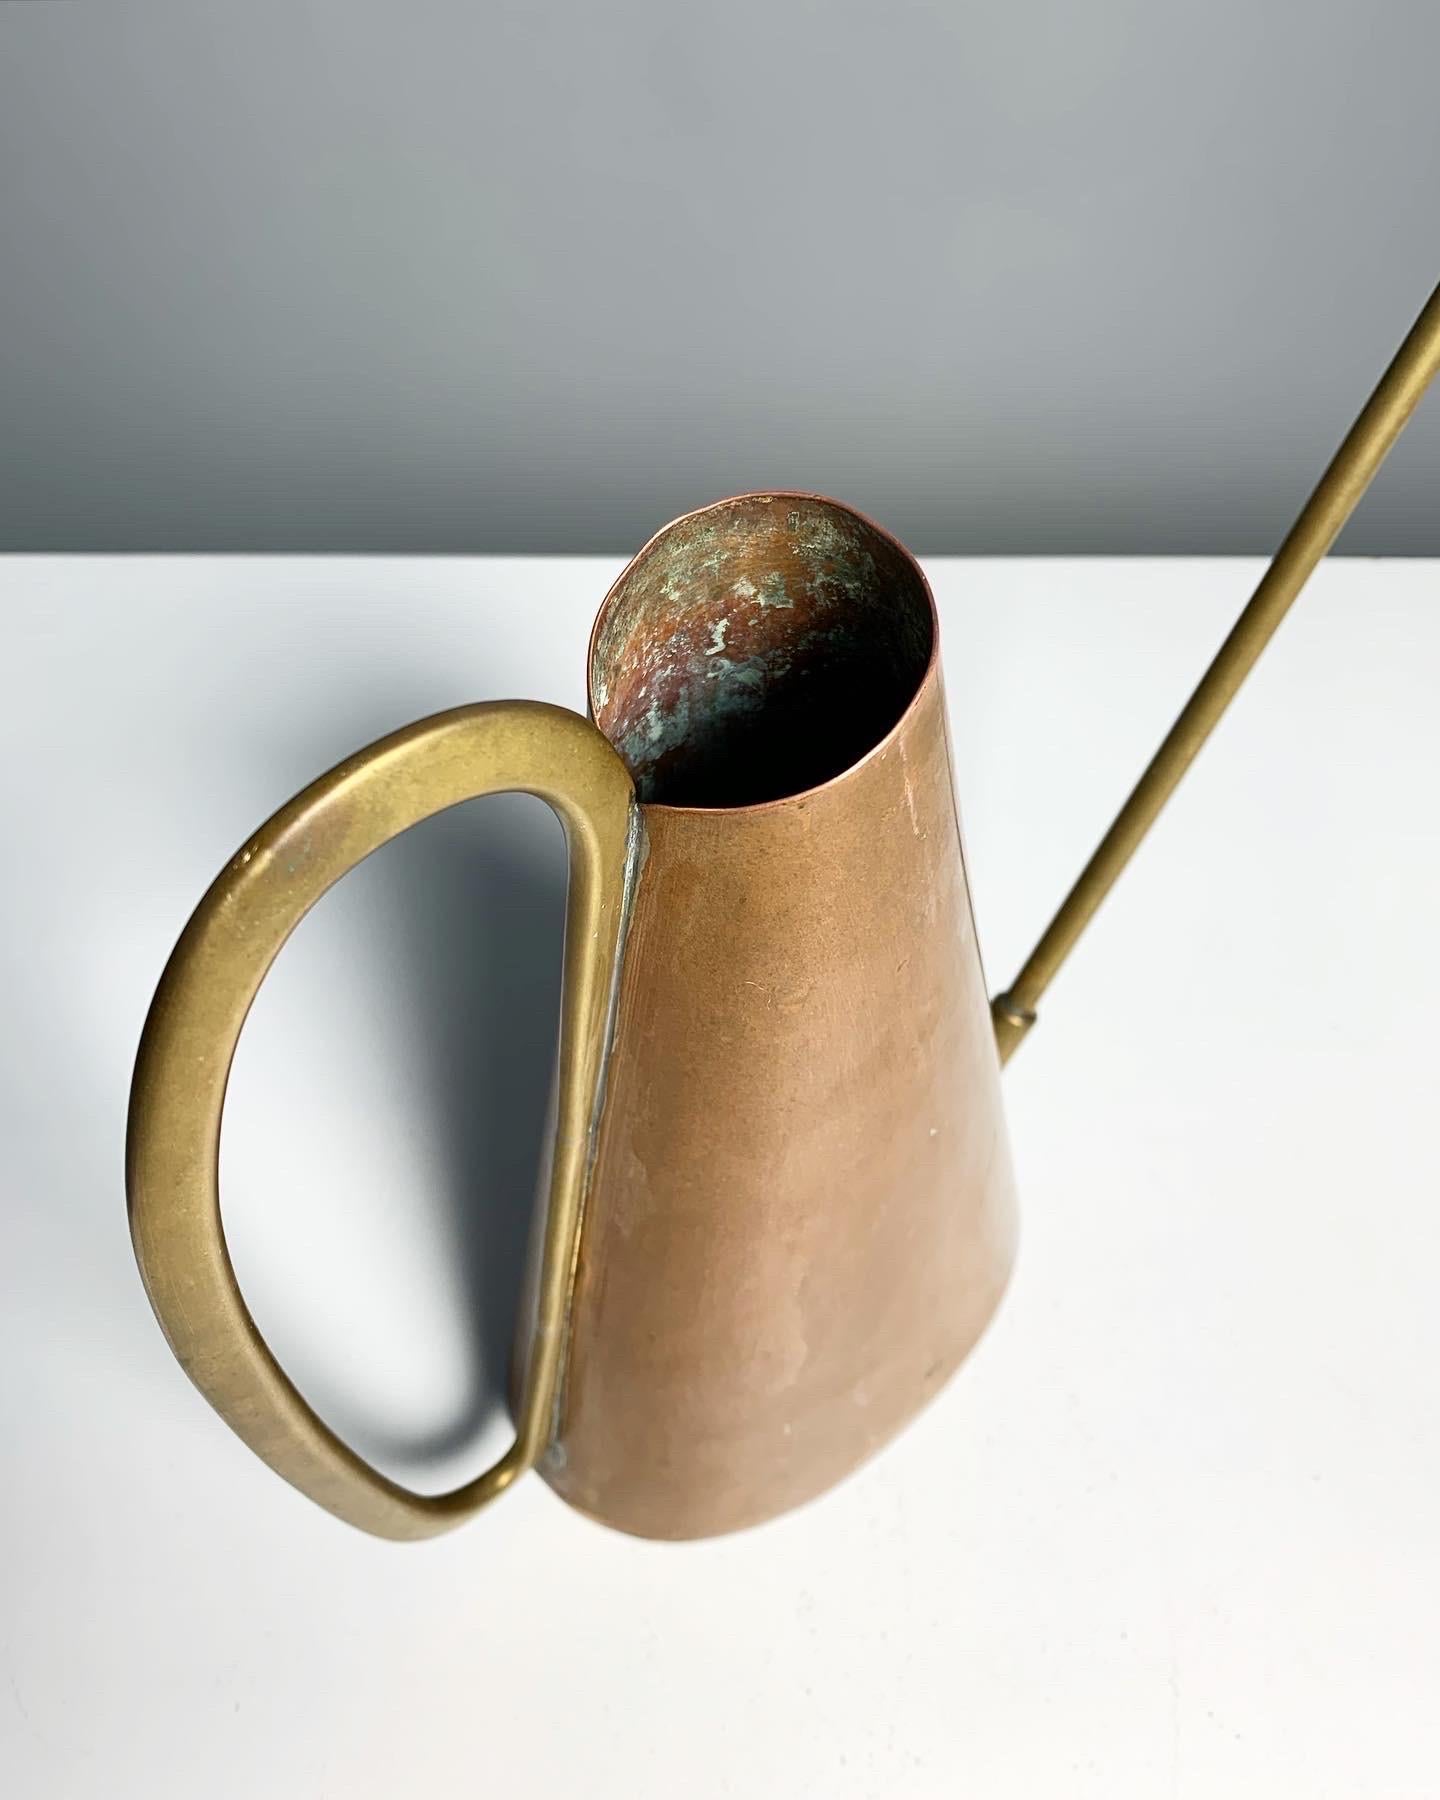 Hand-Crafted Karl Hagenauer Watering Can Copper & Brass, Vienna 1950s